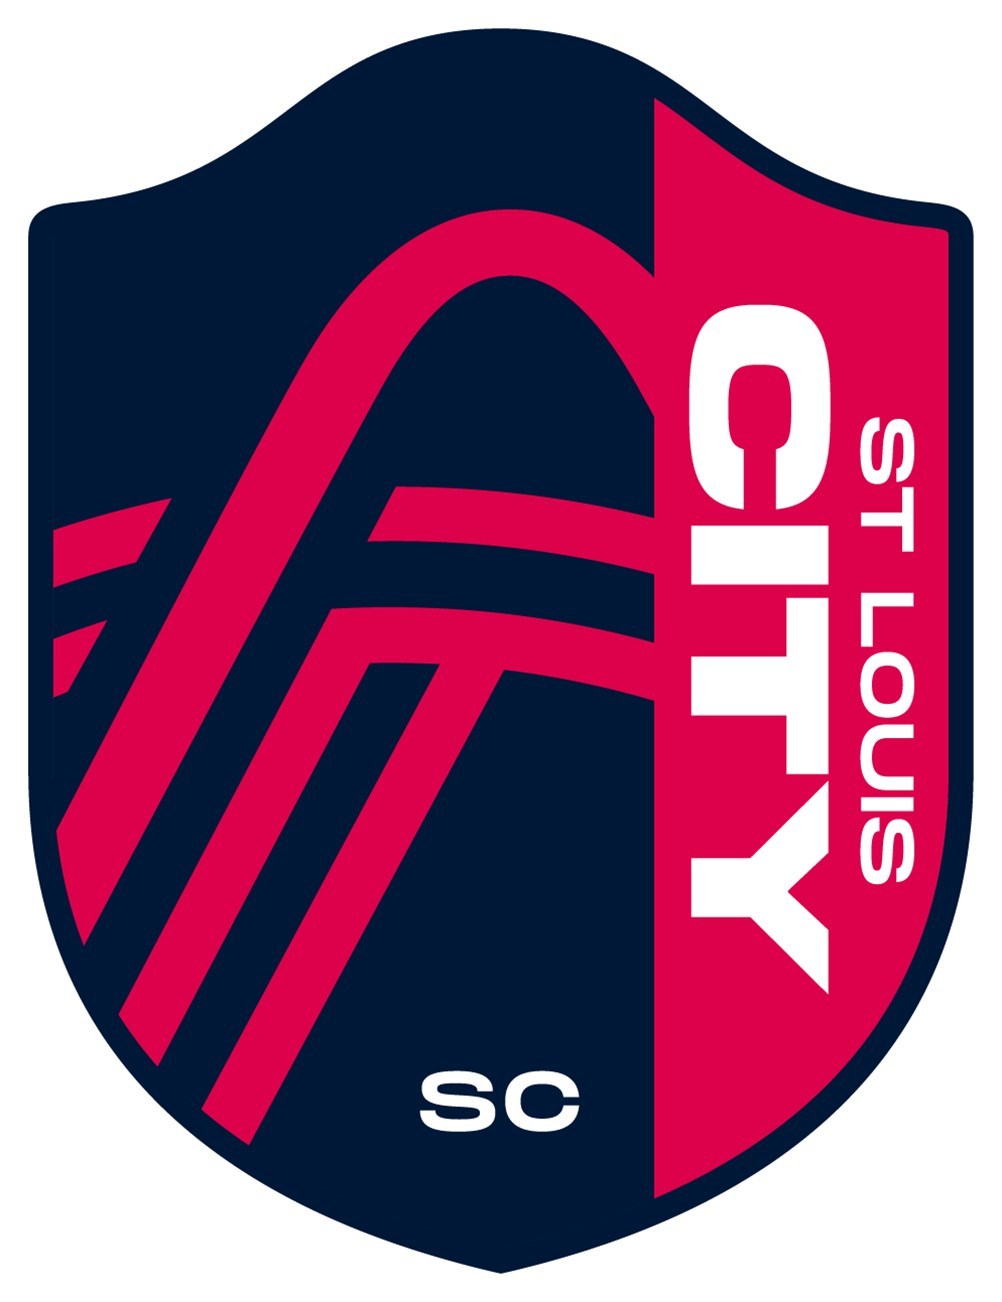 St. Louis City SC unveils Purina as jersey sponsor